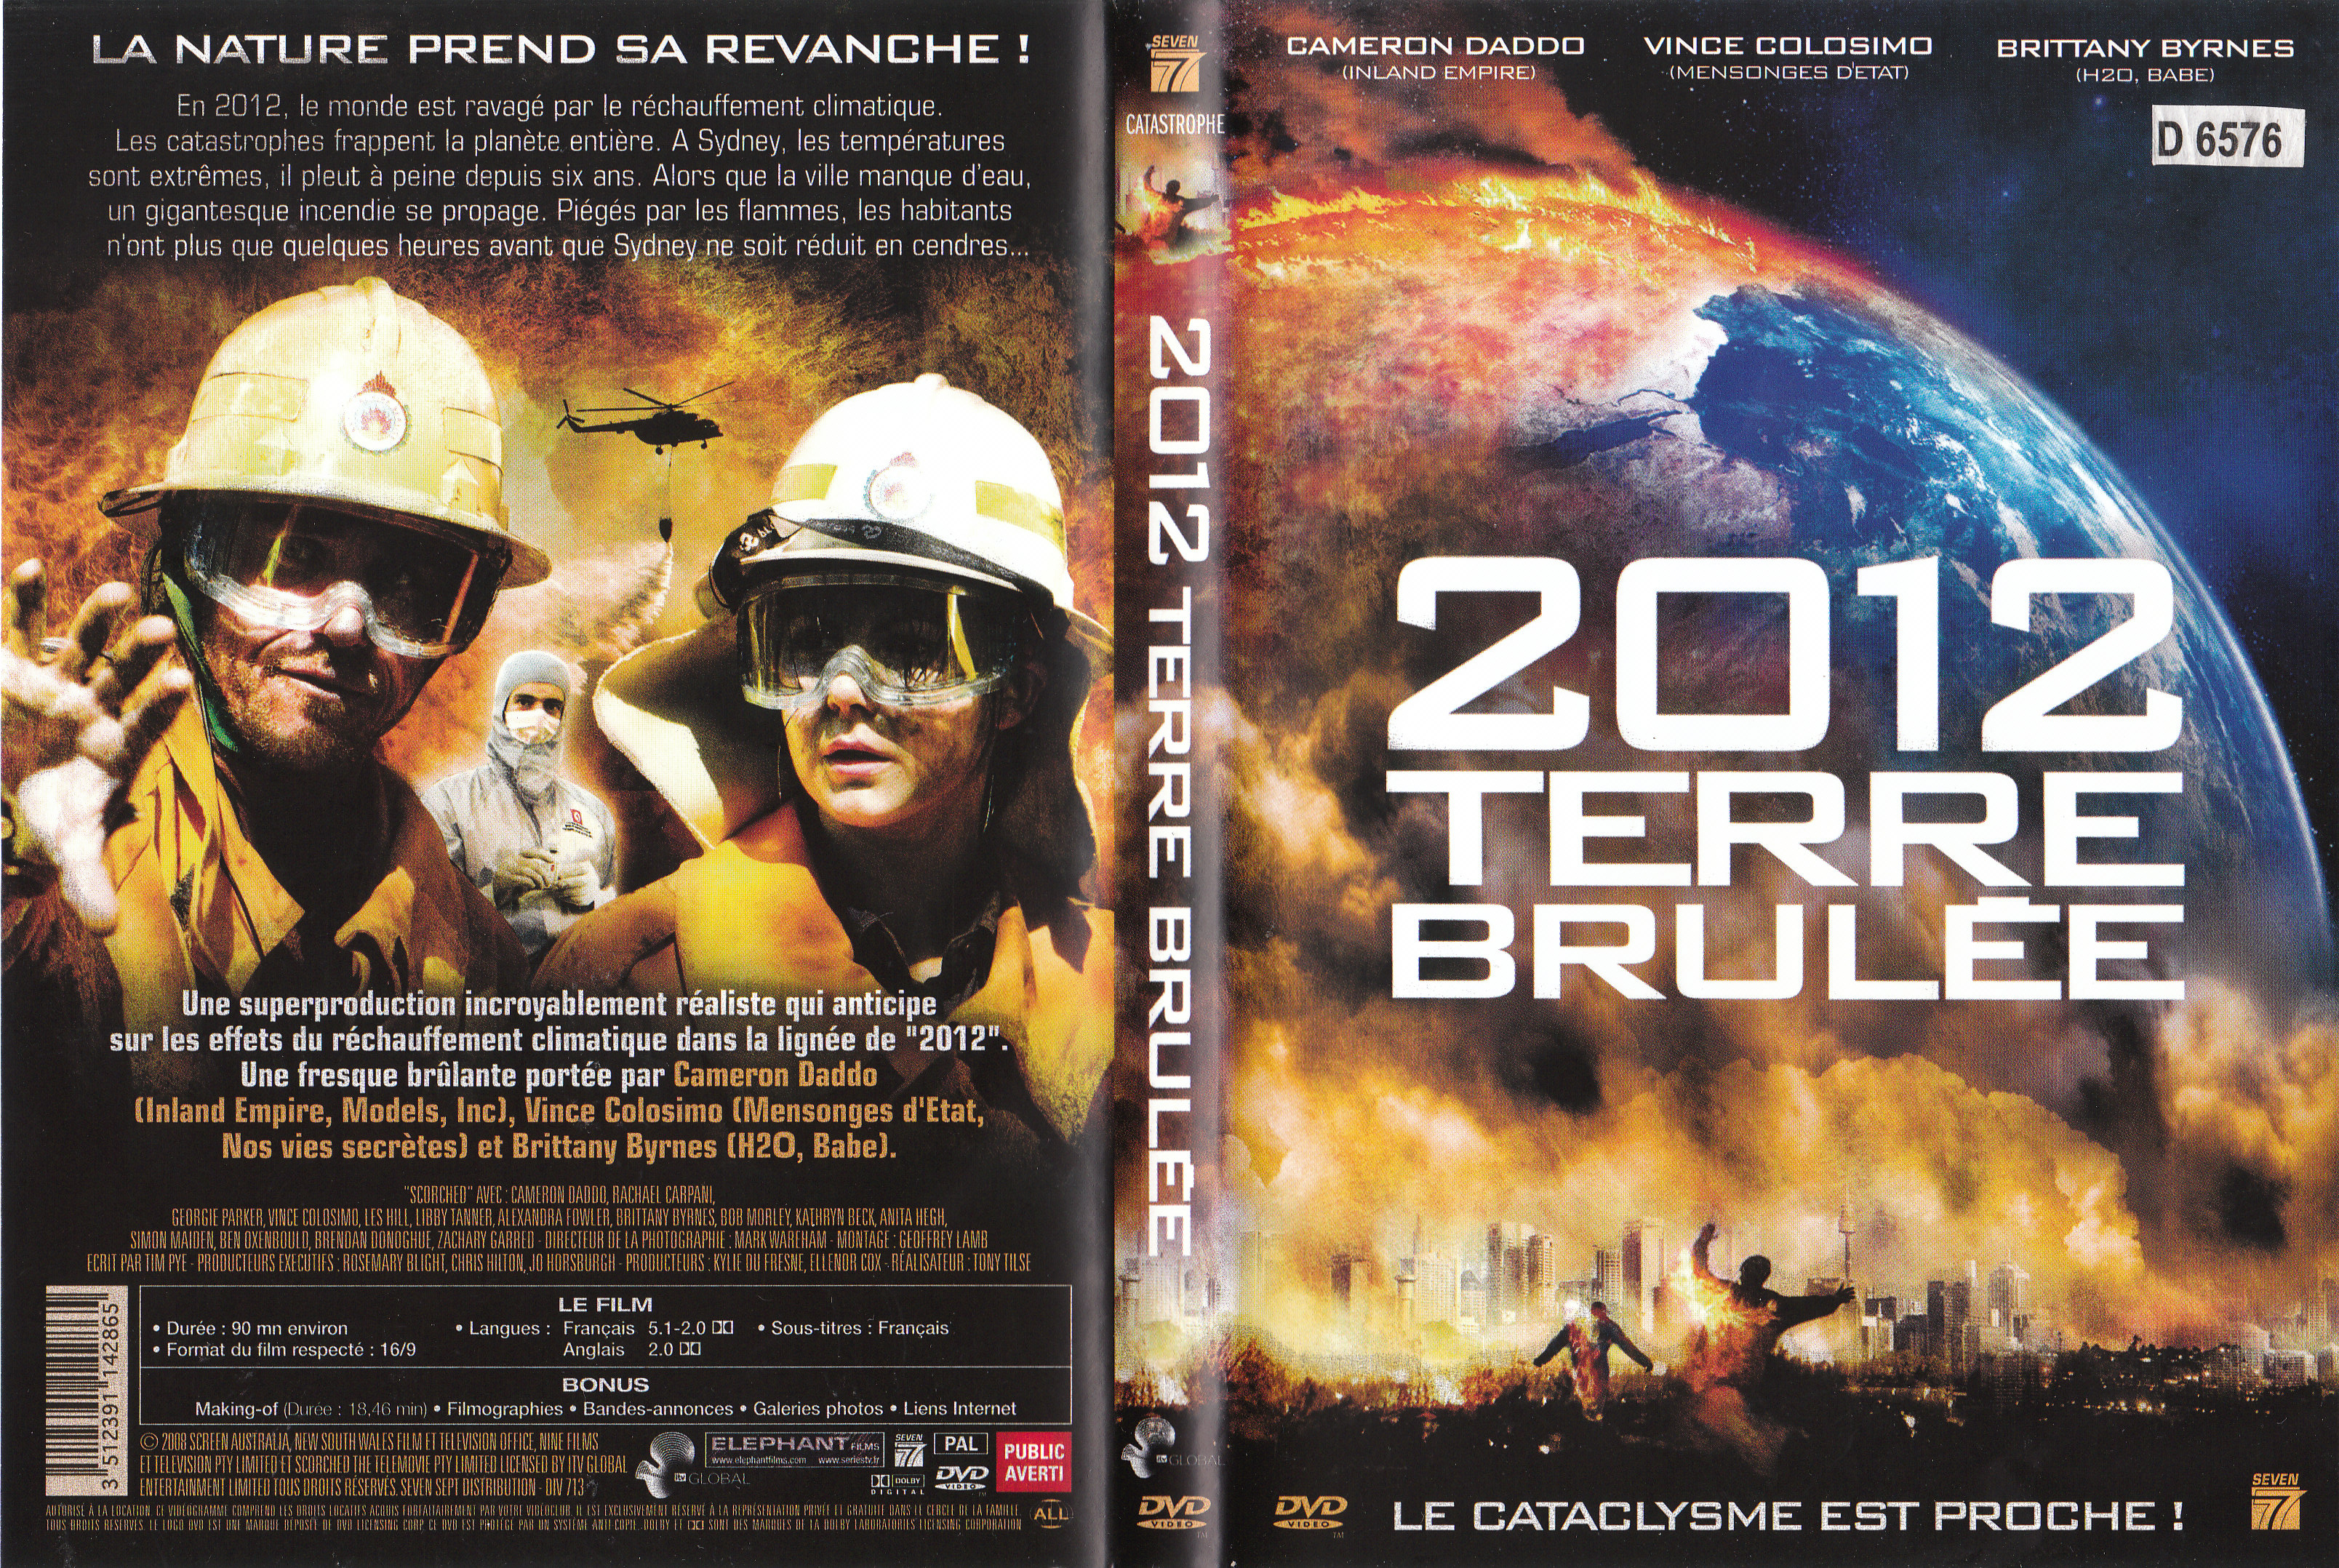 Jaquette DVD 2012 Terre brule